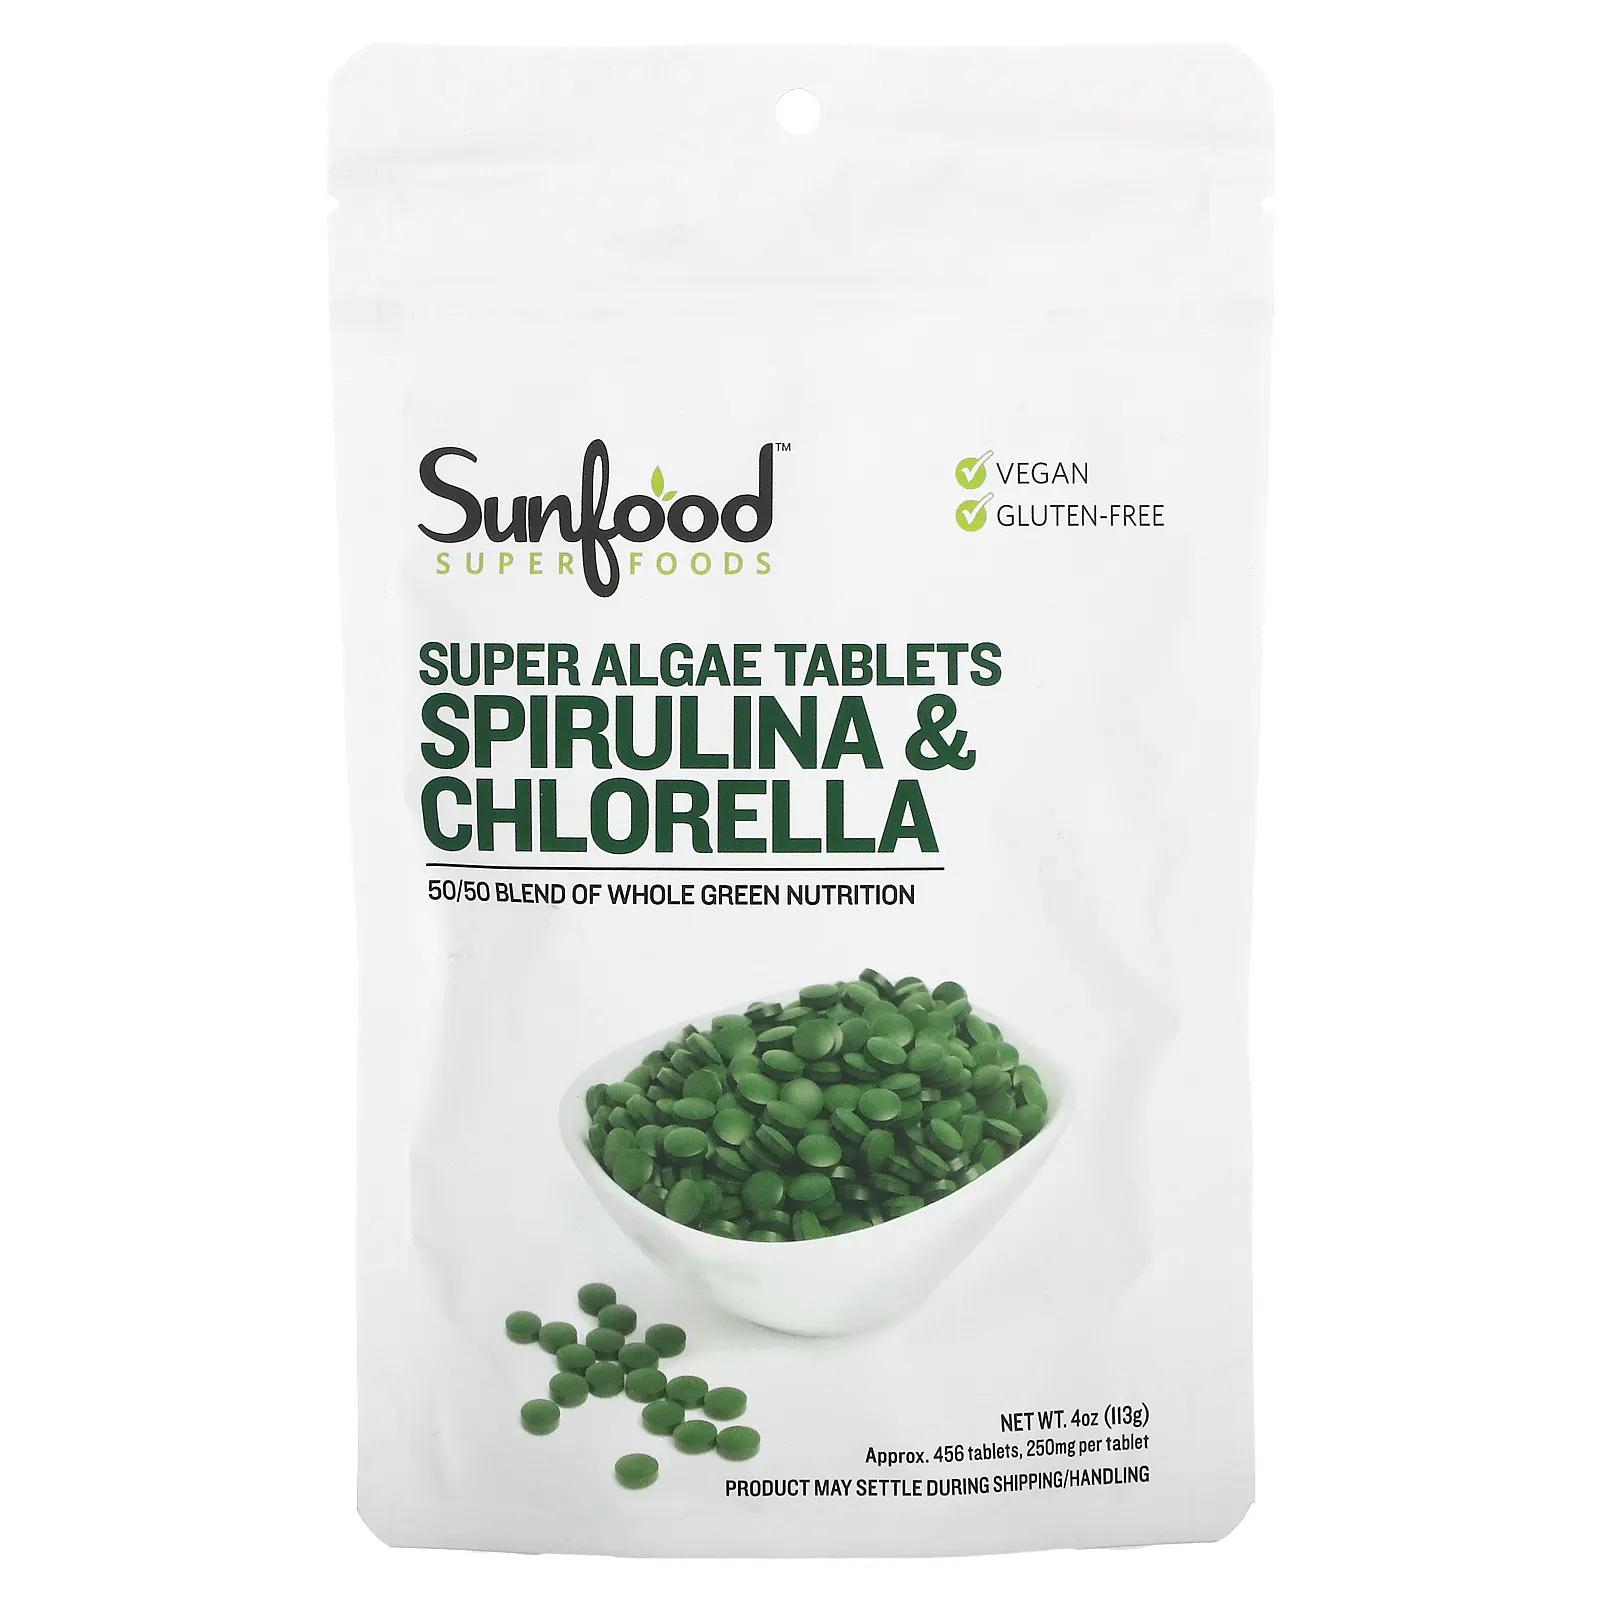 Sunfood спирулина и хлорелла таблетки с суперводорослями 250 мг 456 таблеток sunfood organic matcha